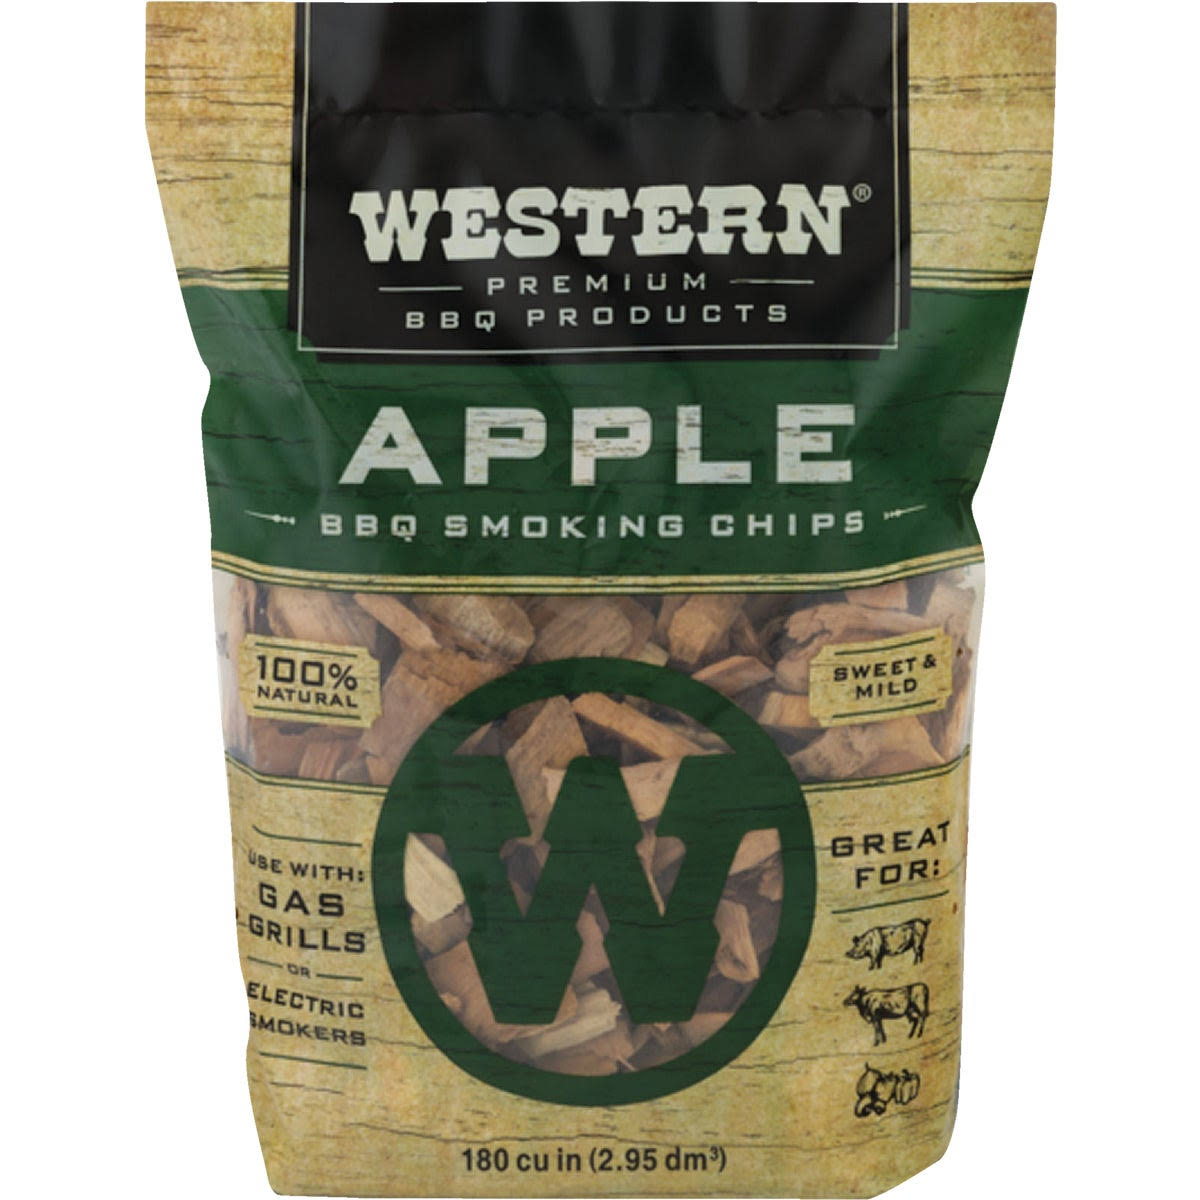 Western BBQ Smoking Chips - Apple, 2lbs